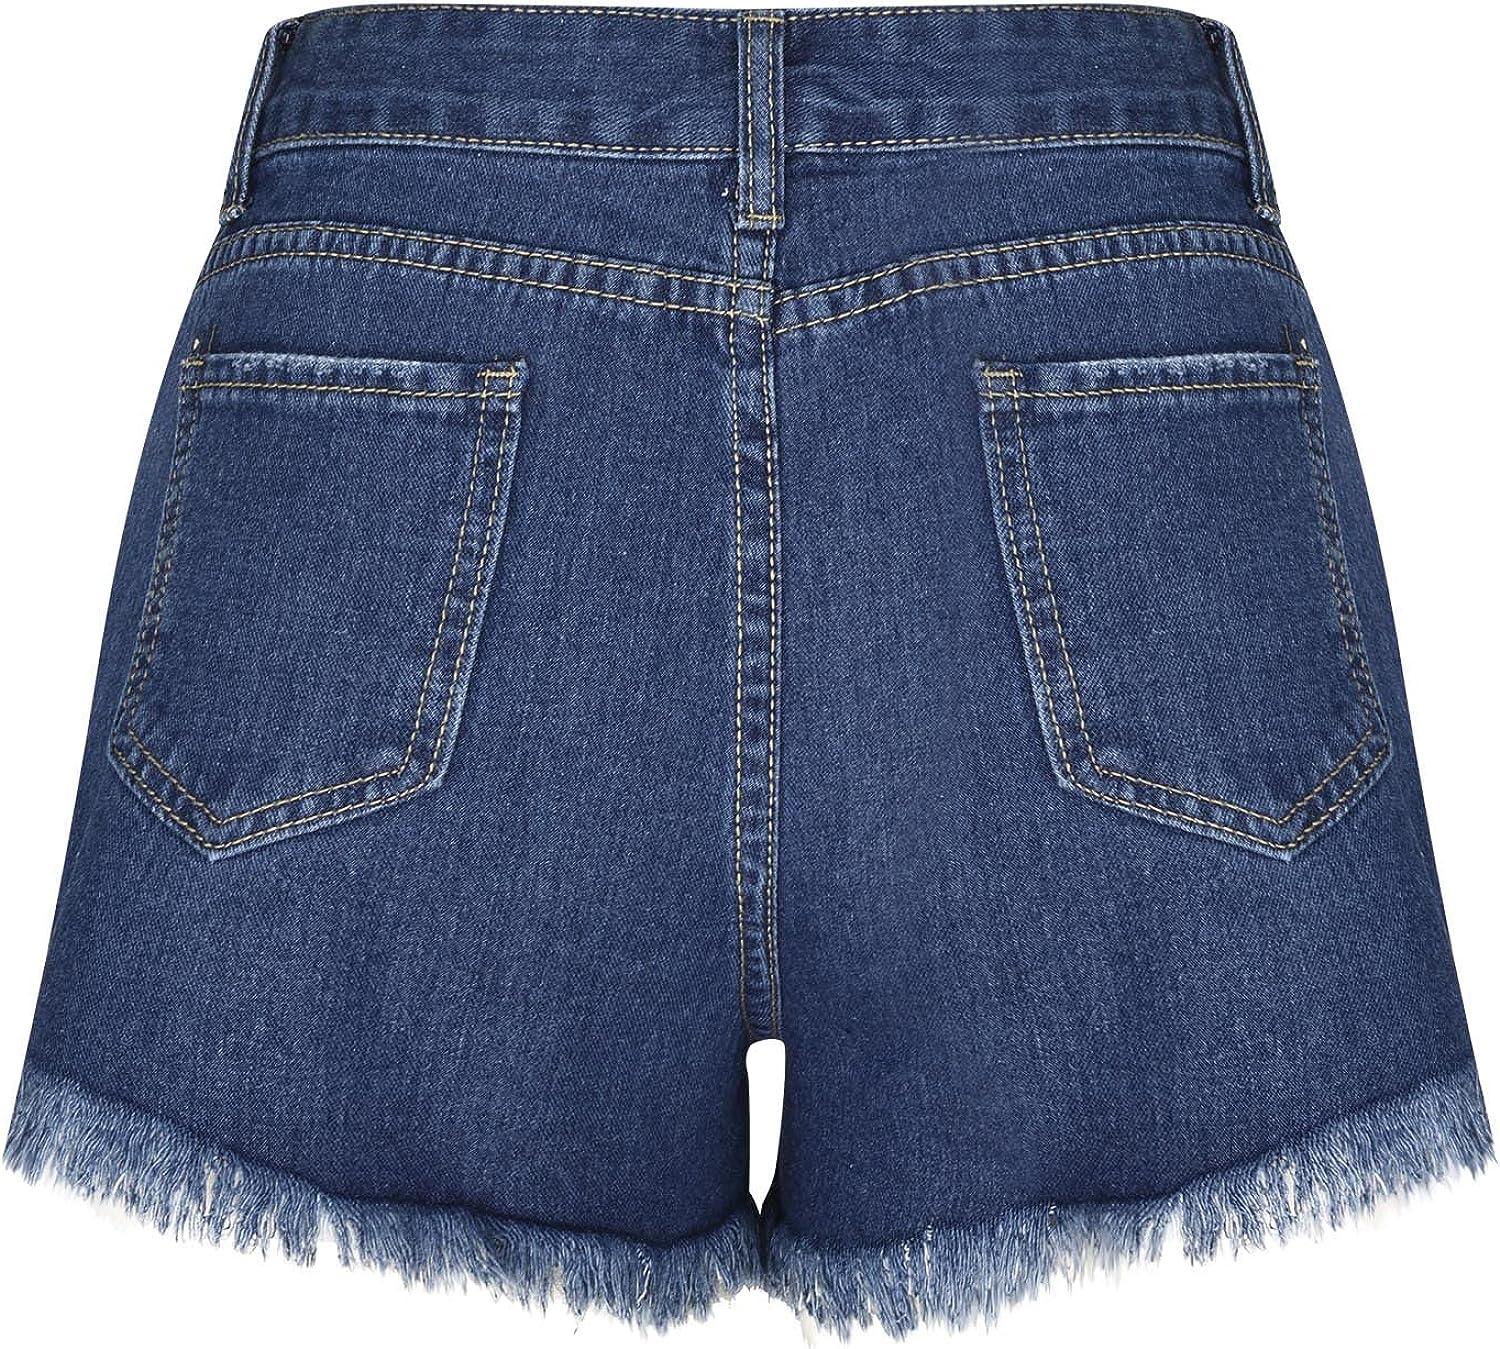 Denim Shorts Women High Waist Ripped Jeans Shorts Comfy Shorts